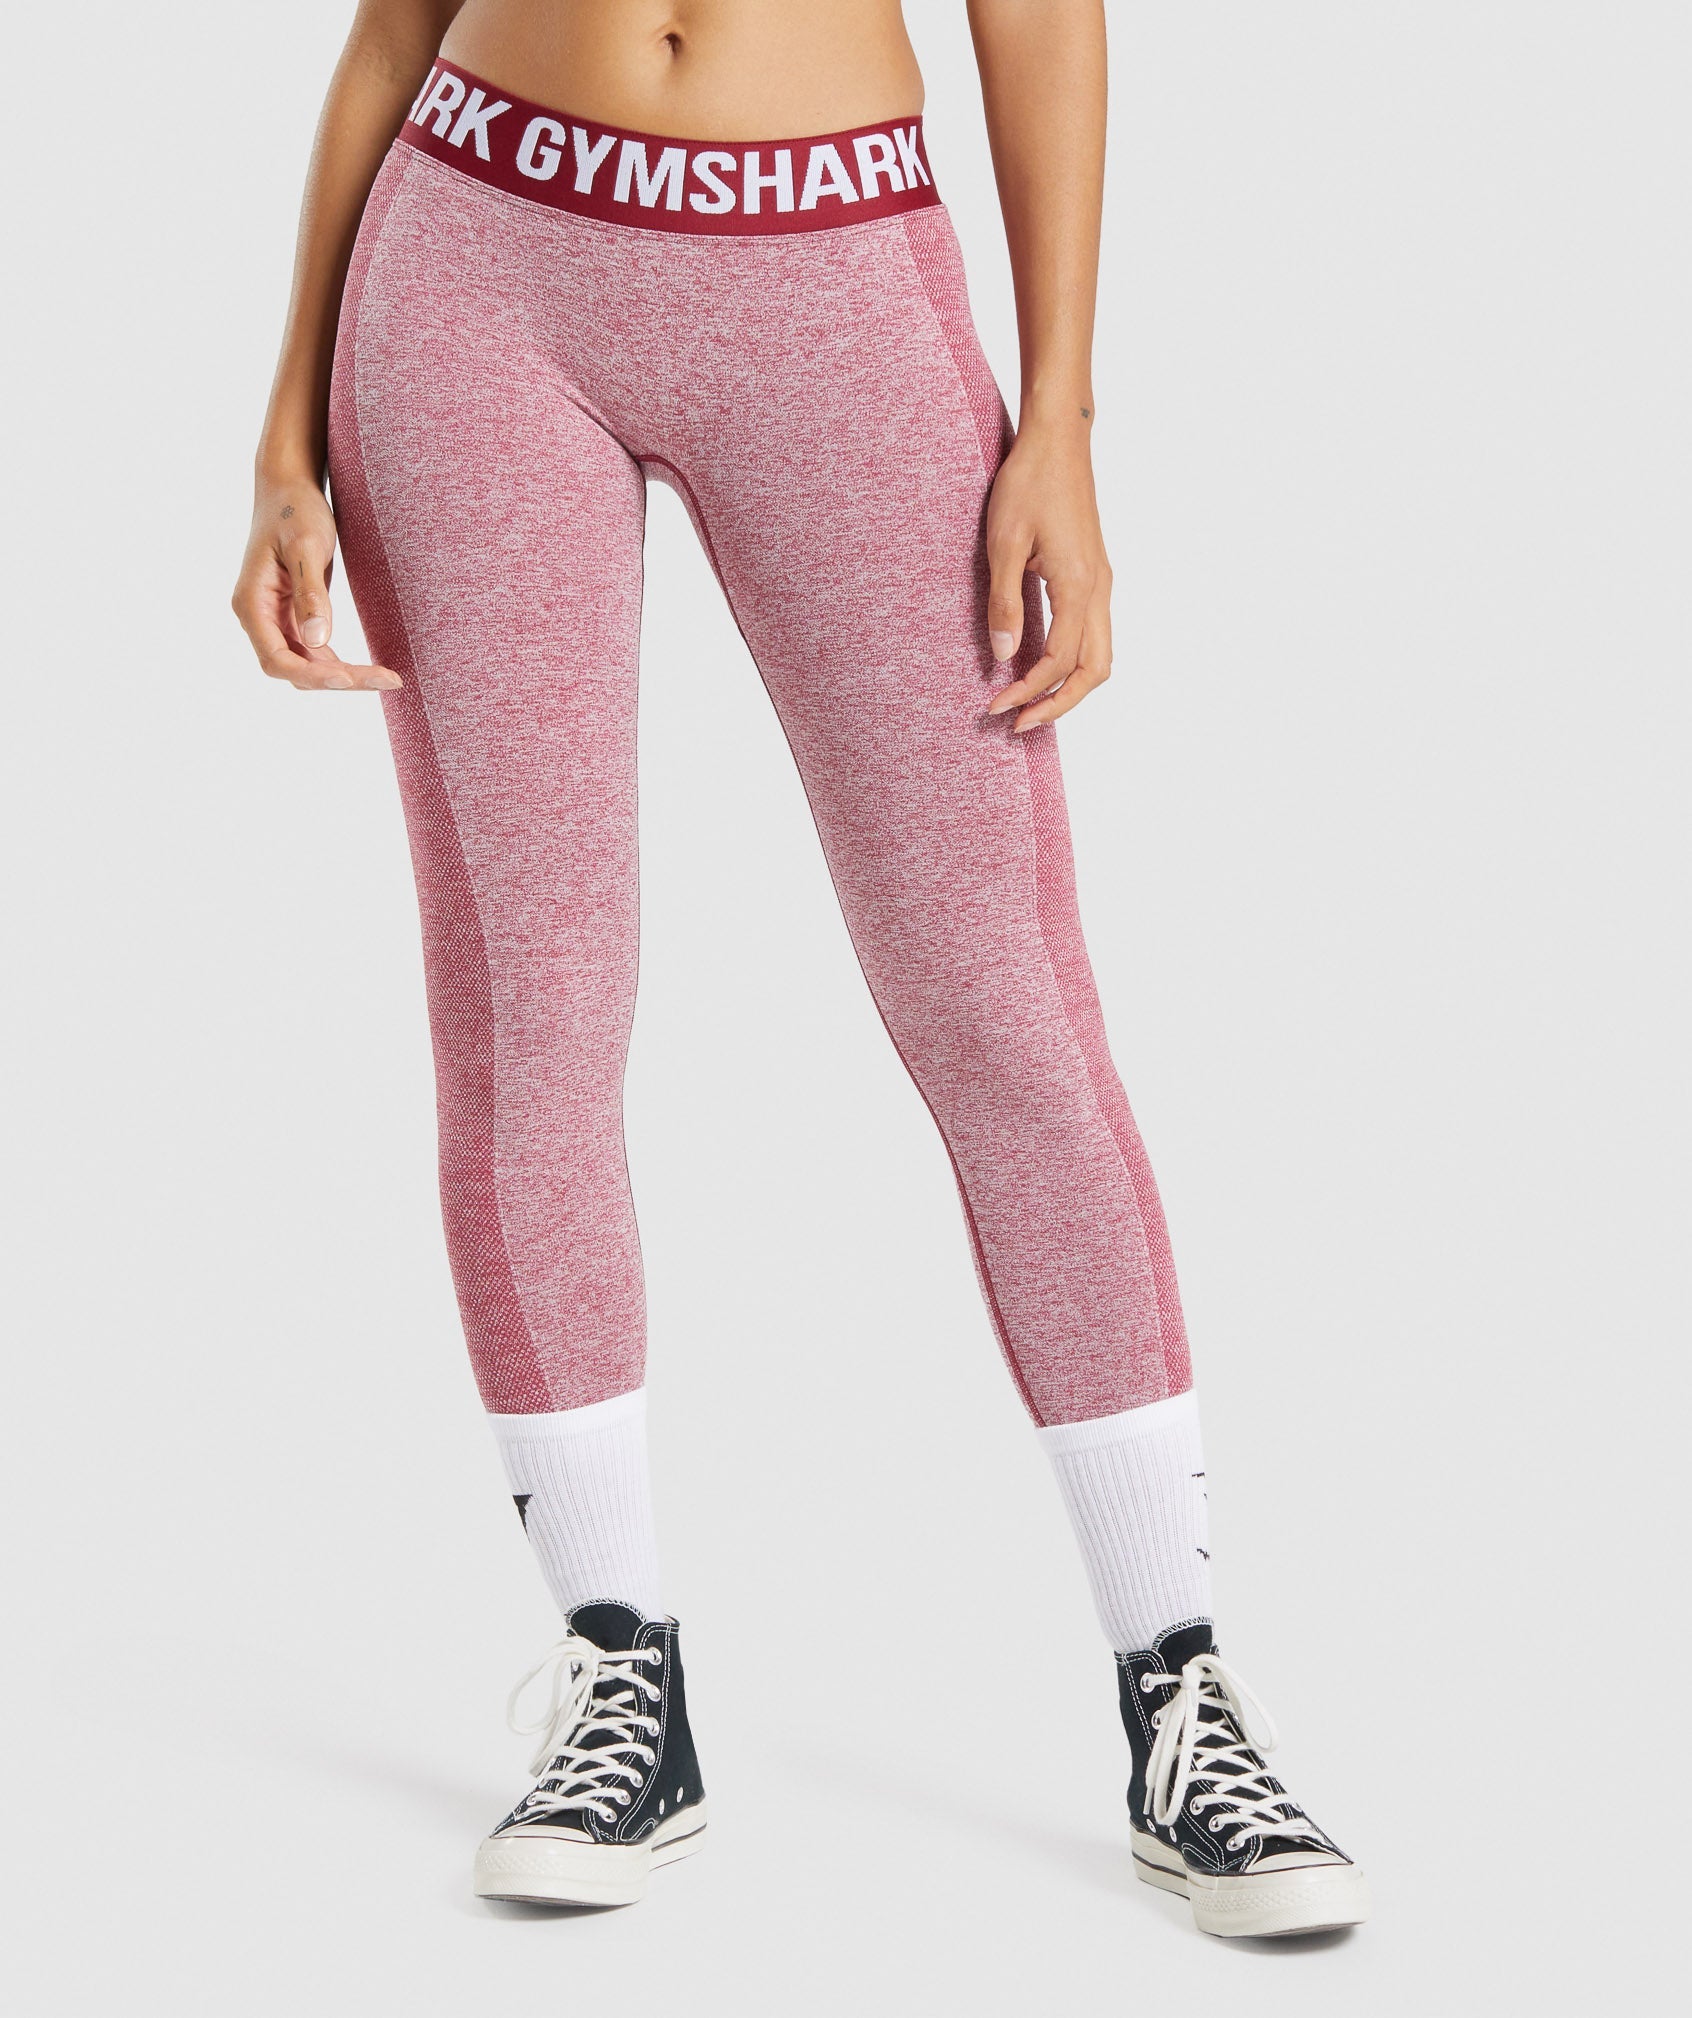 Gymshark Flex Highwaisted Leggings Pink - $18 (64% Off Retail